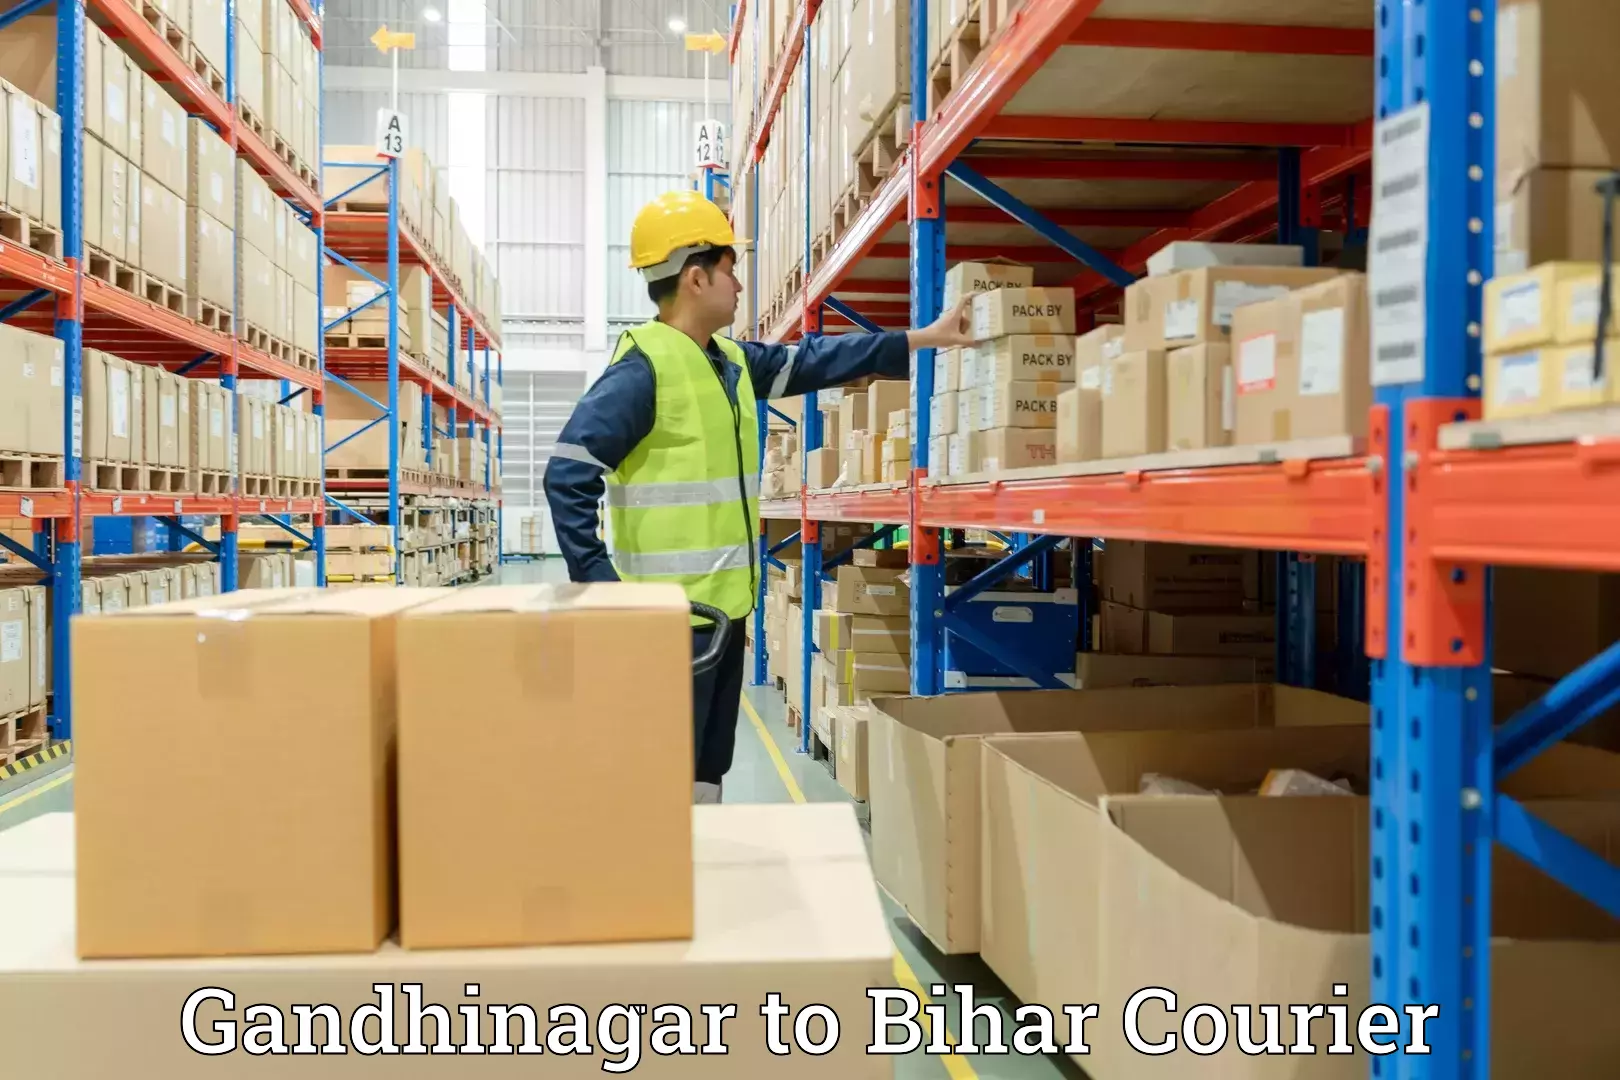 Furniture relocation experts Gandhinagar to Bihar